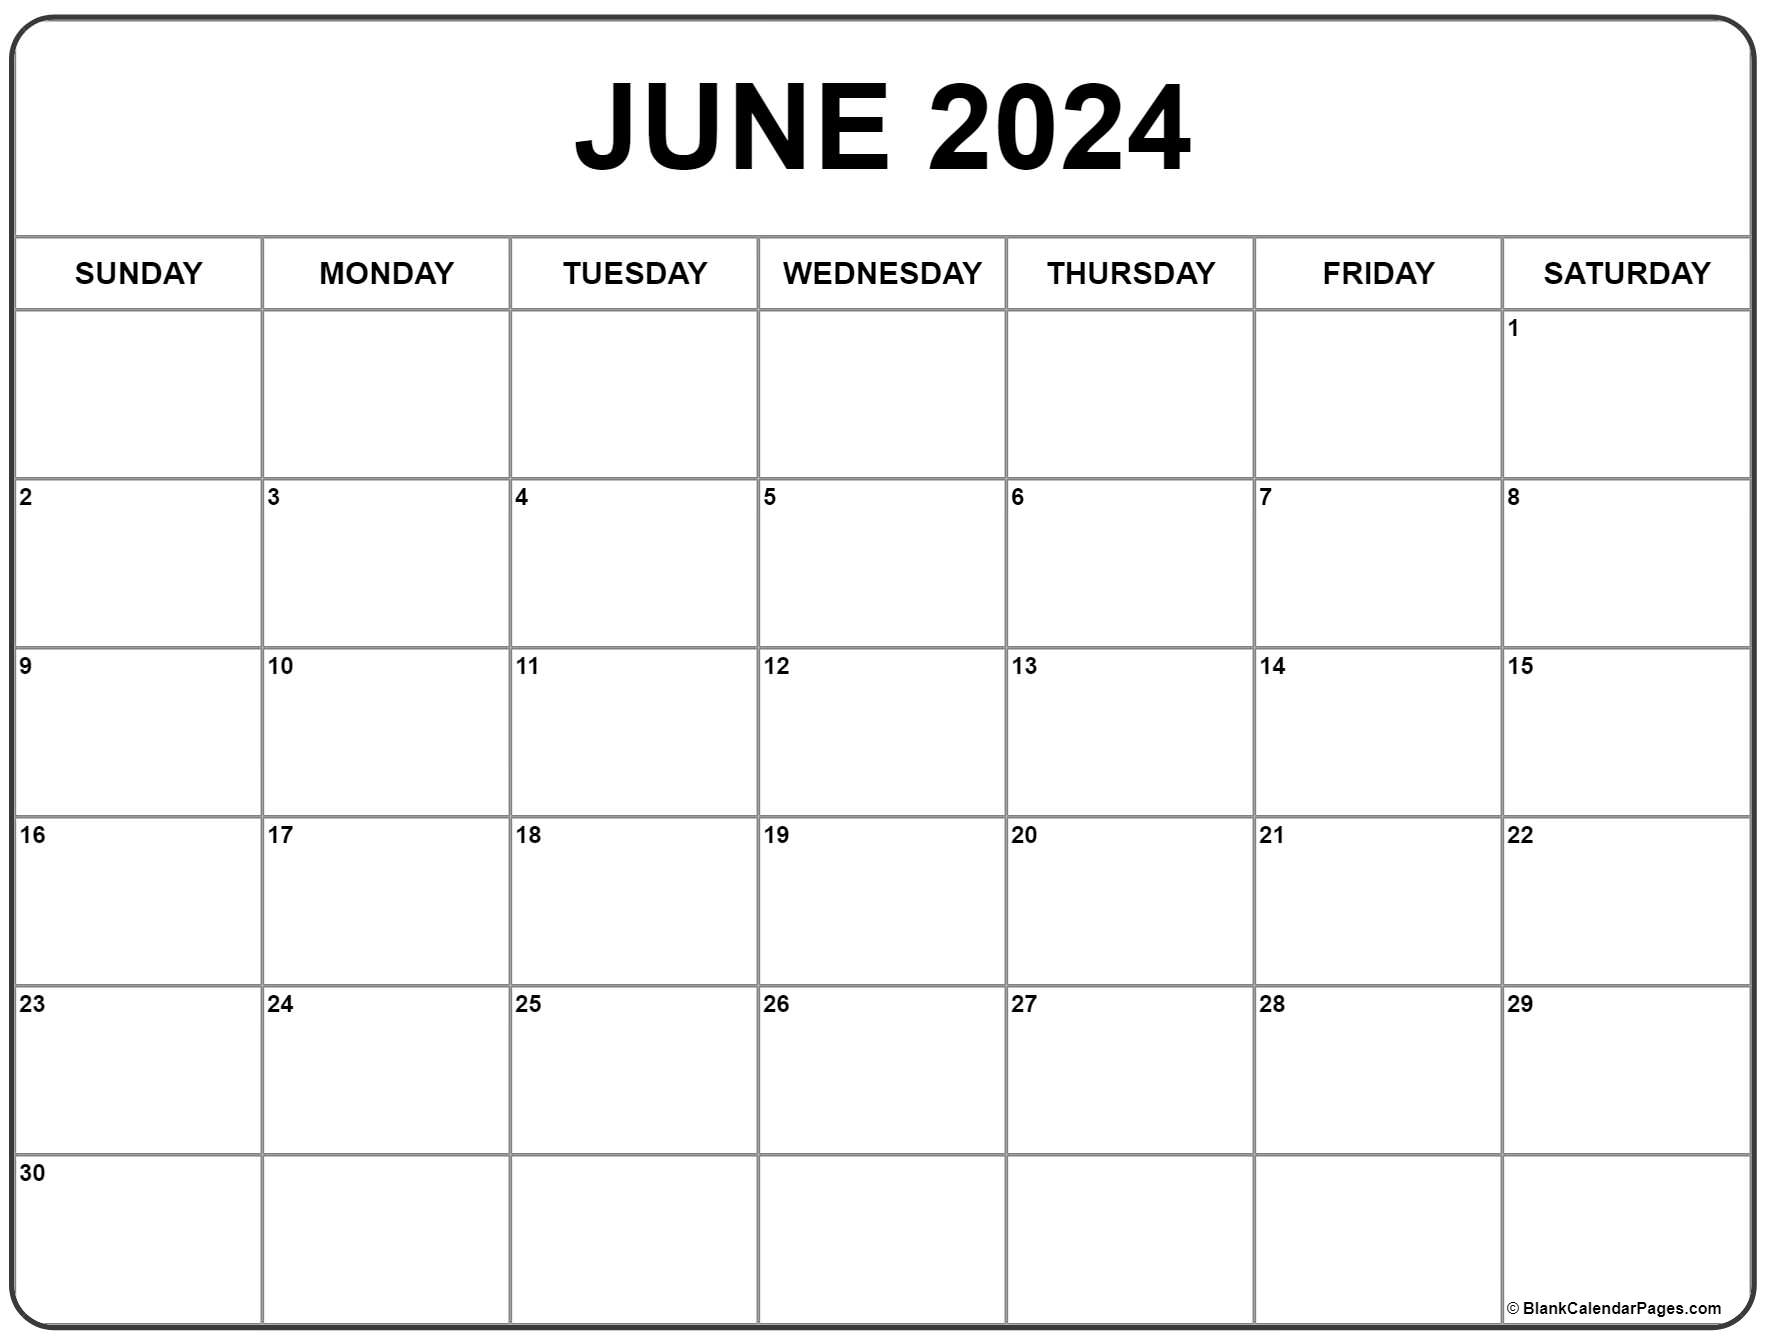 June 2024 Calendar | Free Printable Calendar regarding Free Printable Blank Calendar June 2024